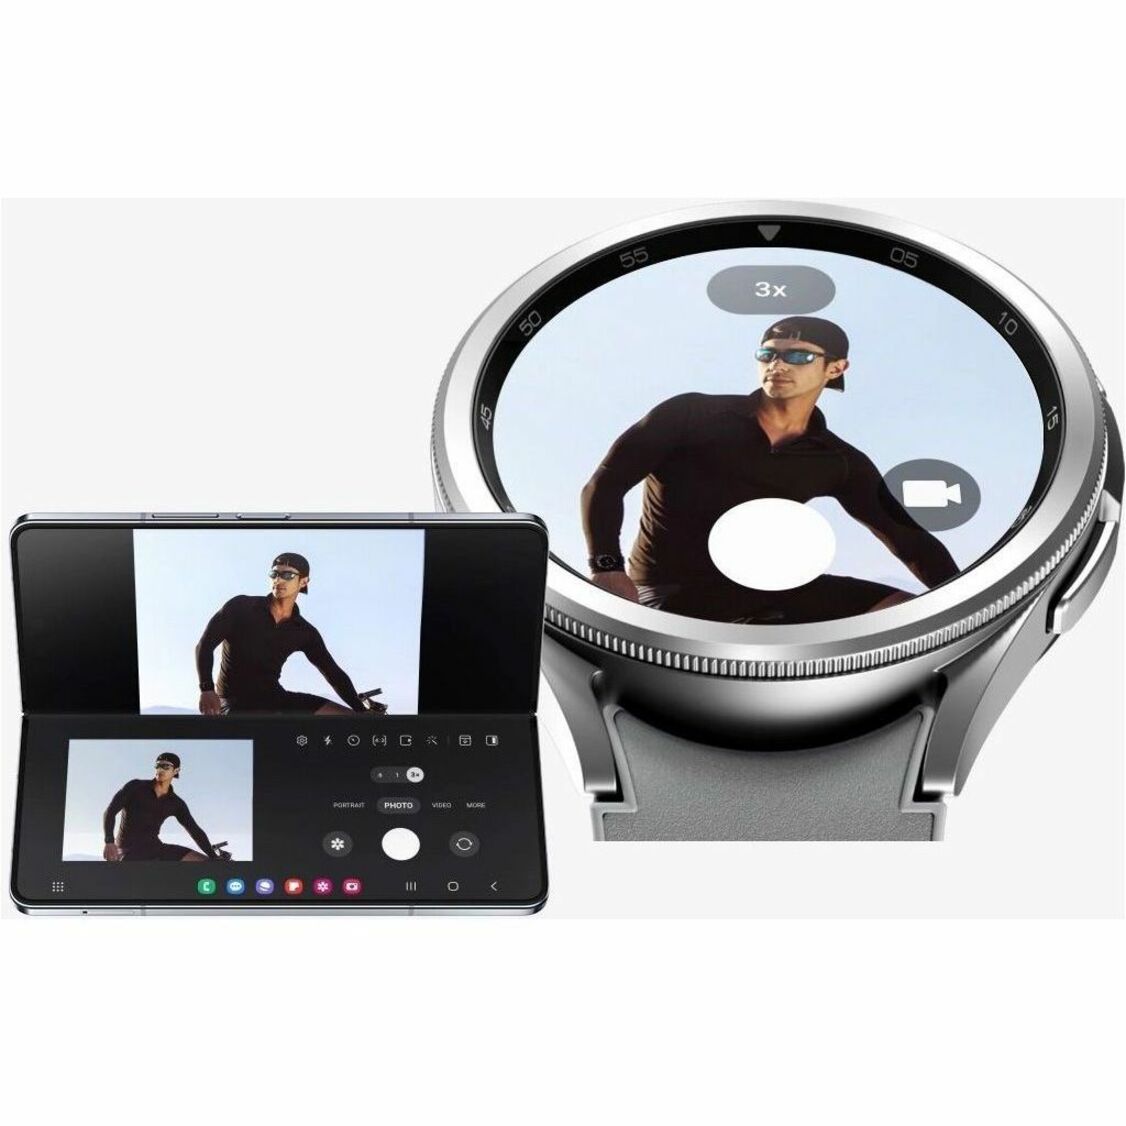 Samsung SM-R950NZSAXAA Galaxy Watch6 Classic Smart Watch, Silver, 43 mm, Bluetooth, Wireless LAN